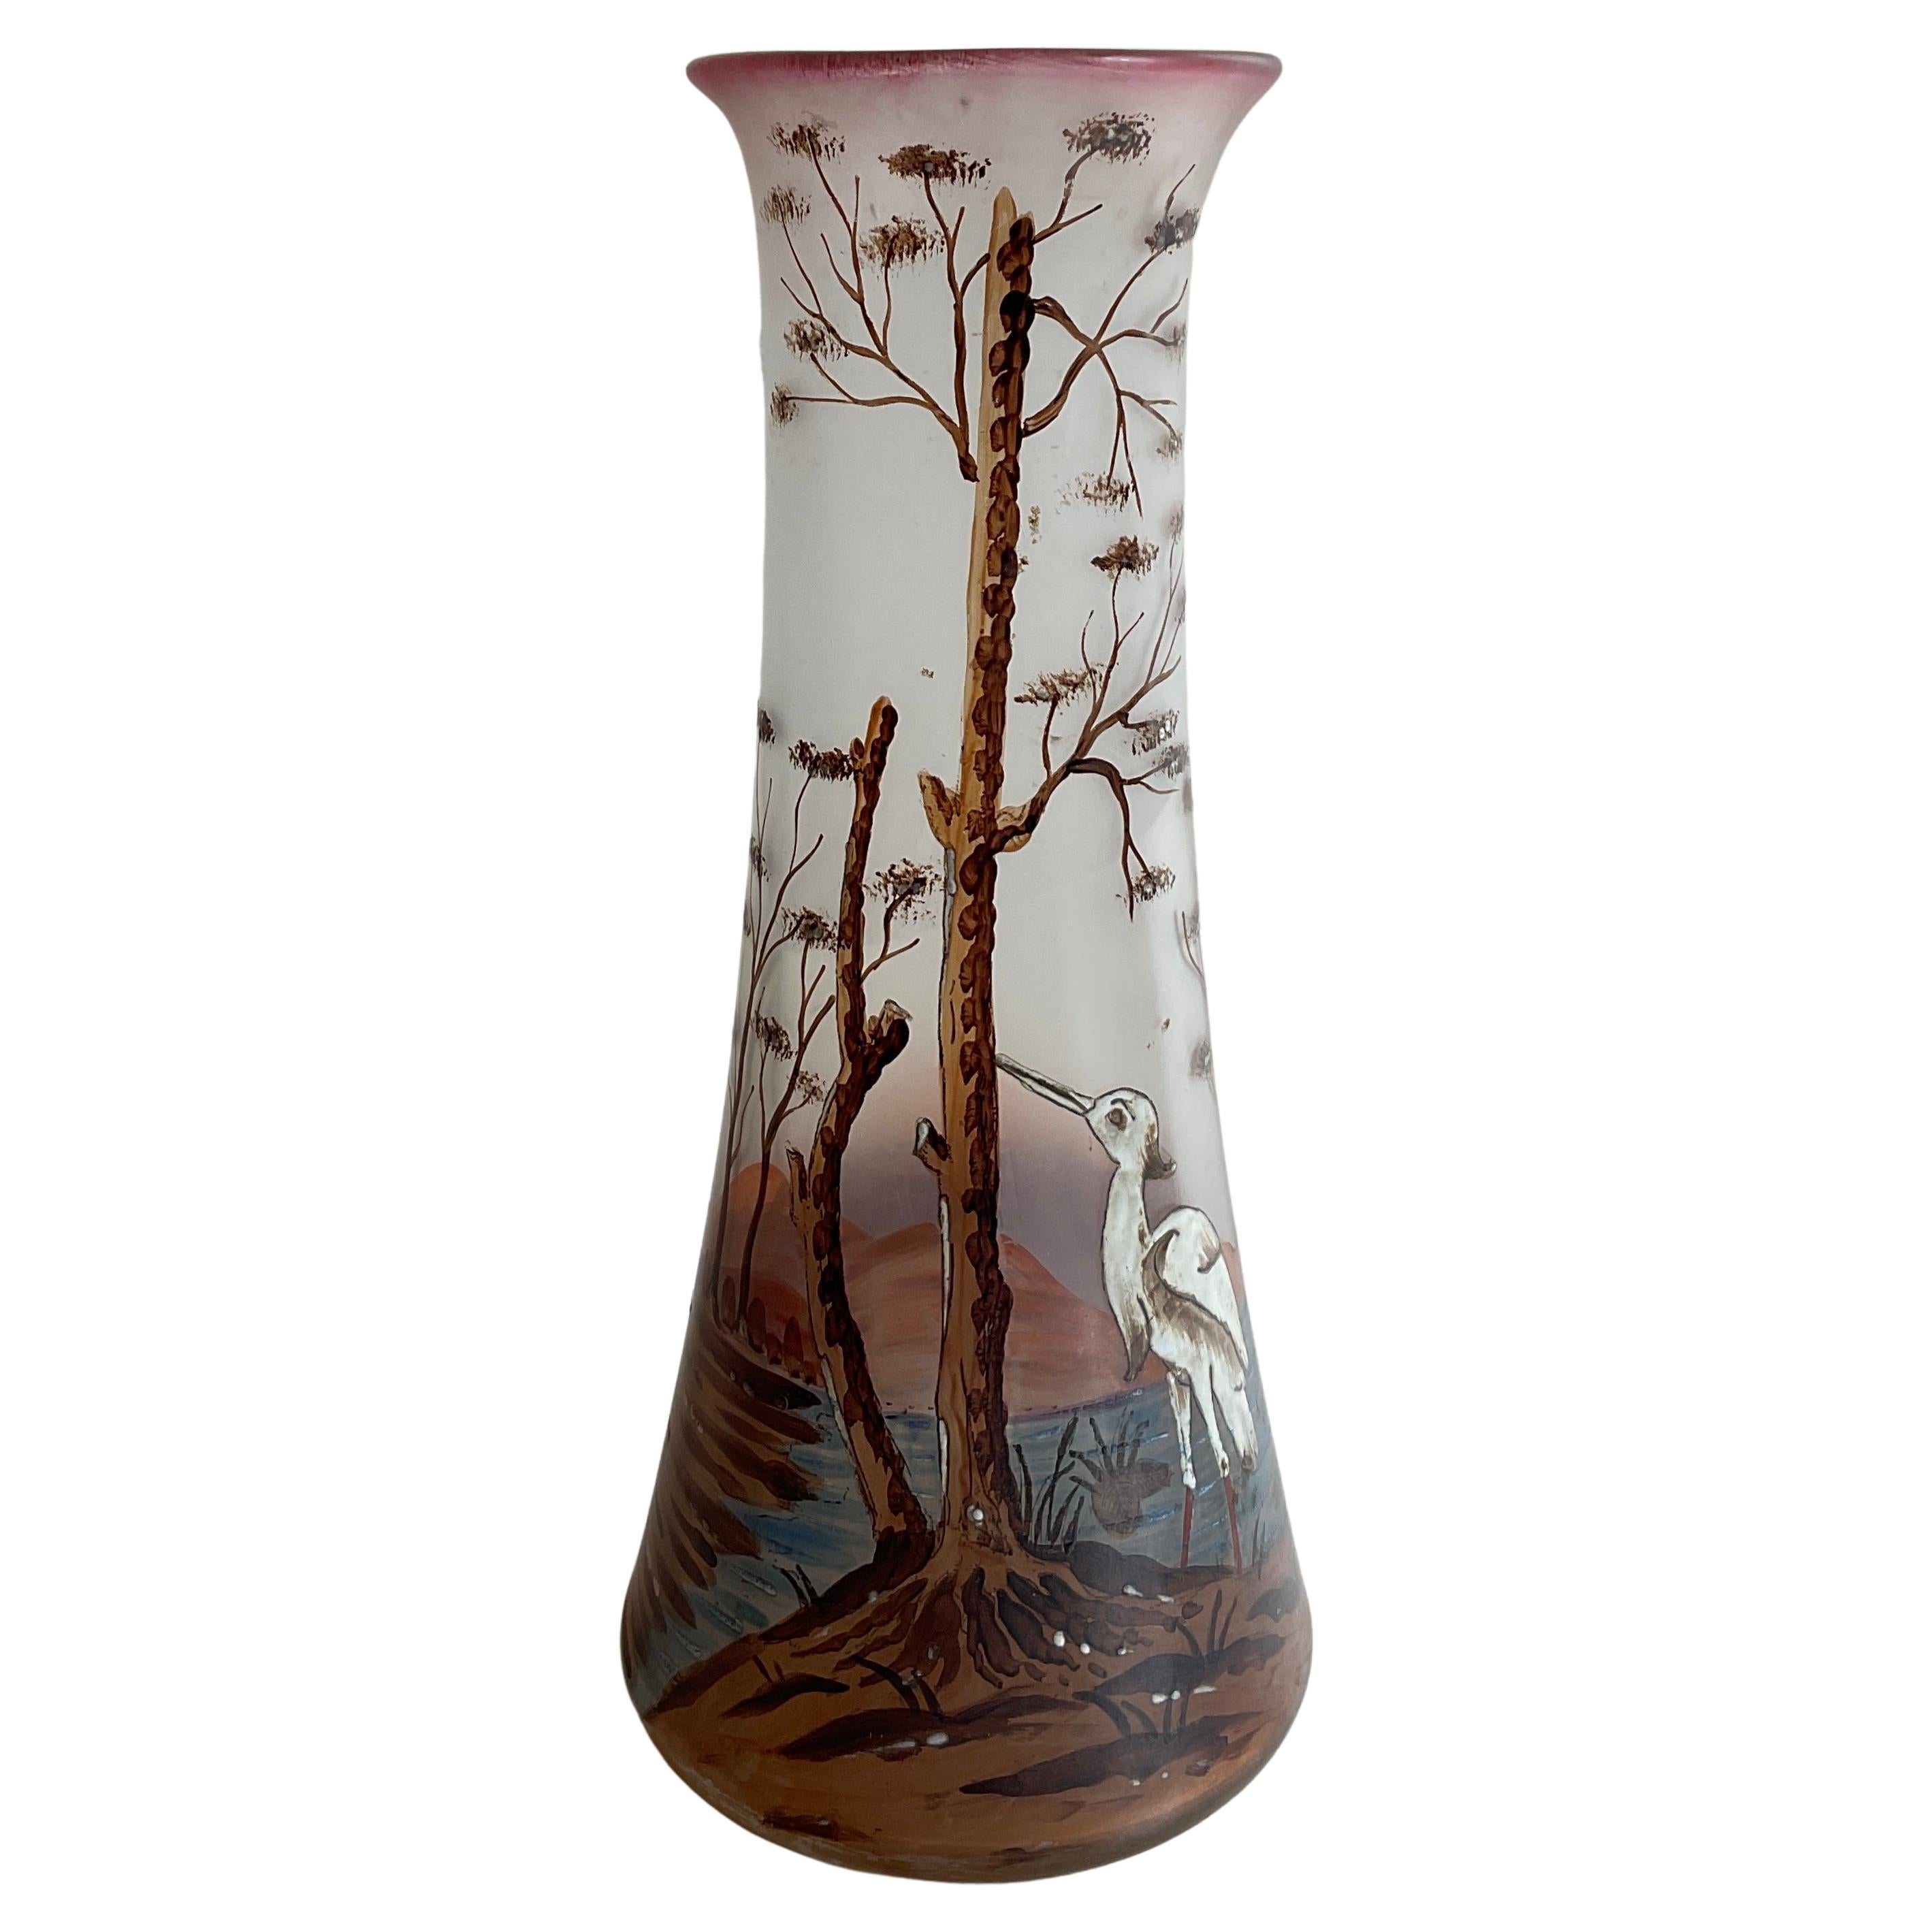 French Art Nouveau Enameled Glass Vase by Francois-Theodore Legras